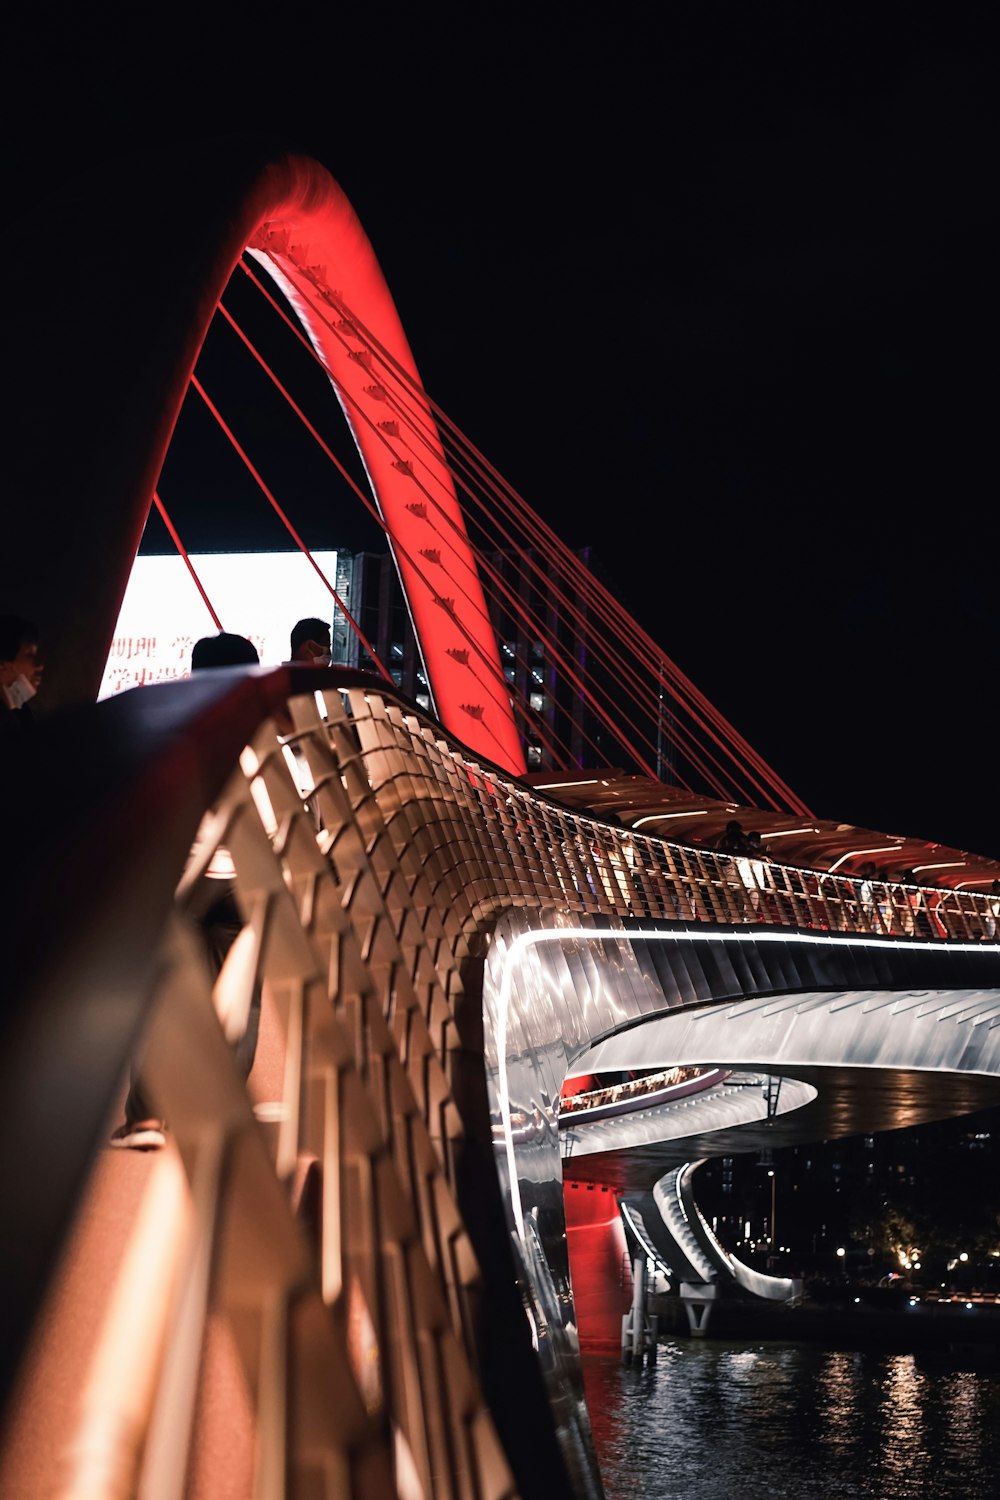 cars on bridge during night time